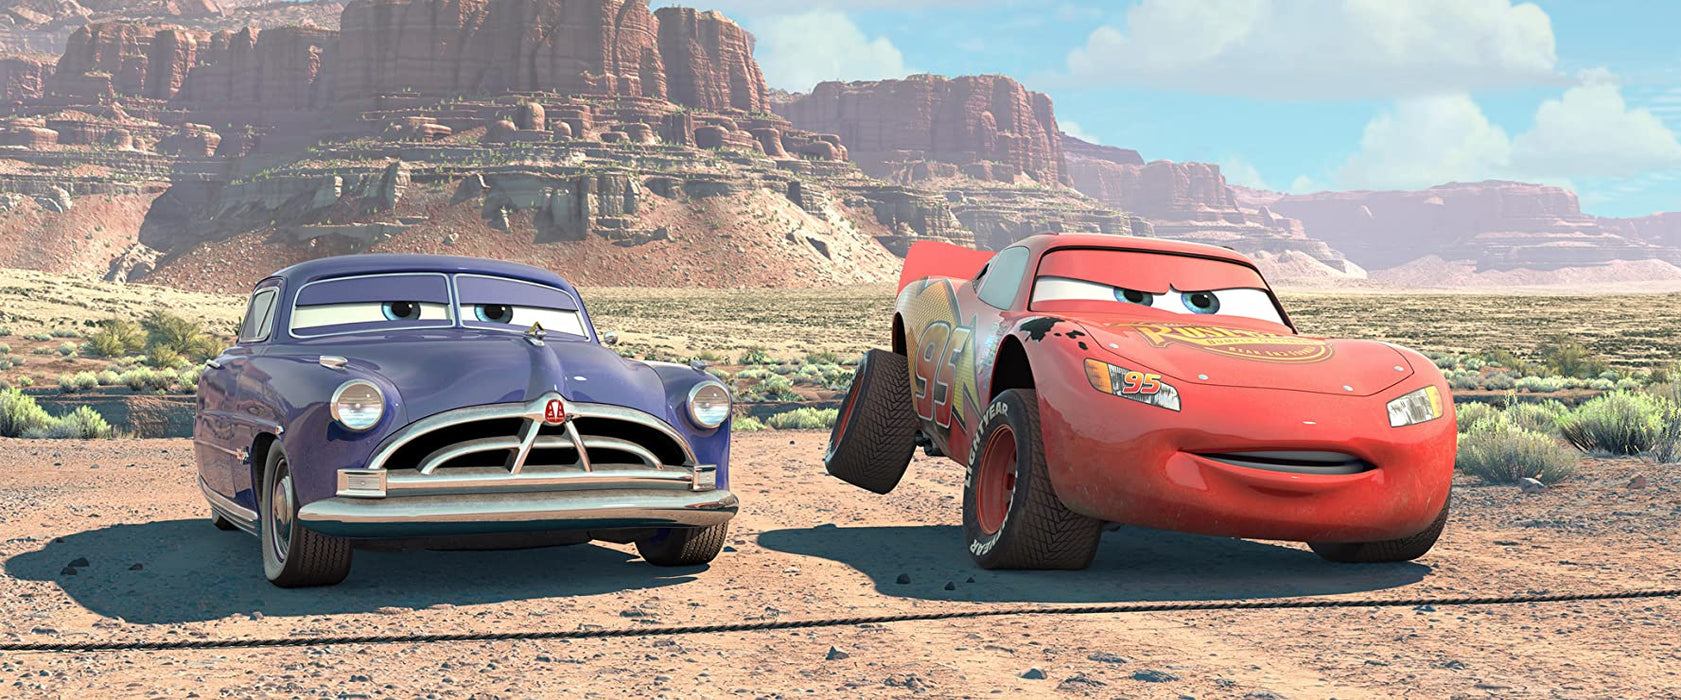 Disney Pixar's Cars - Limited Edition SteelBook [Blu-ray]